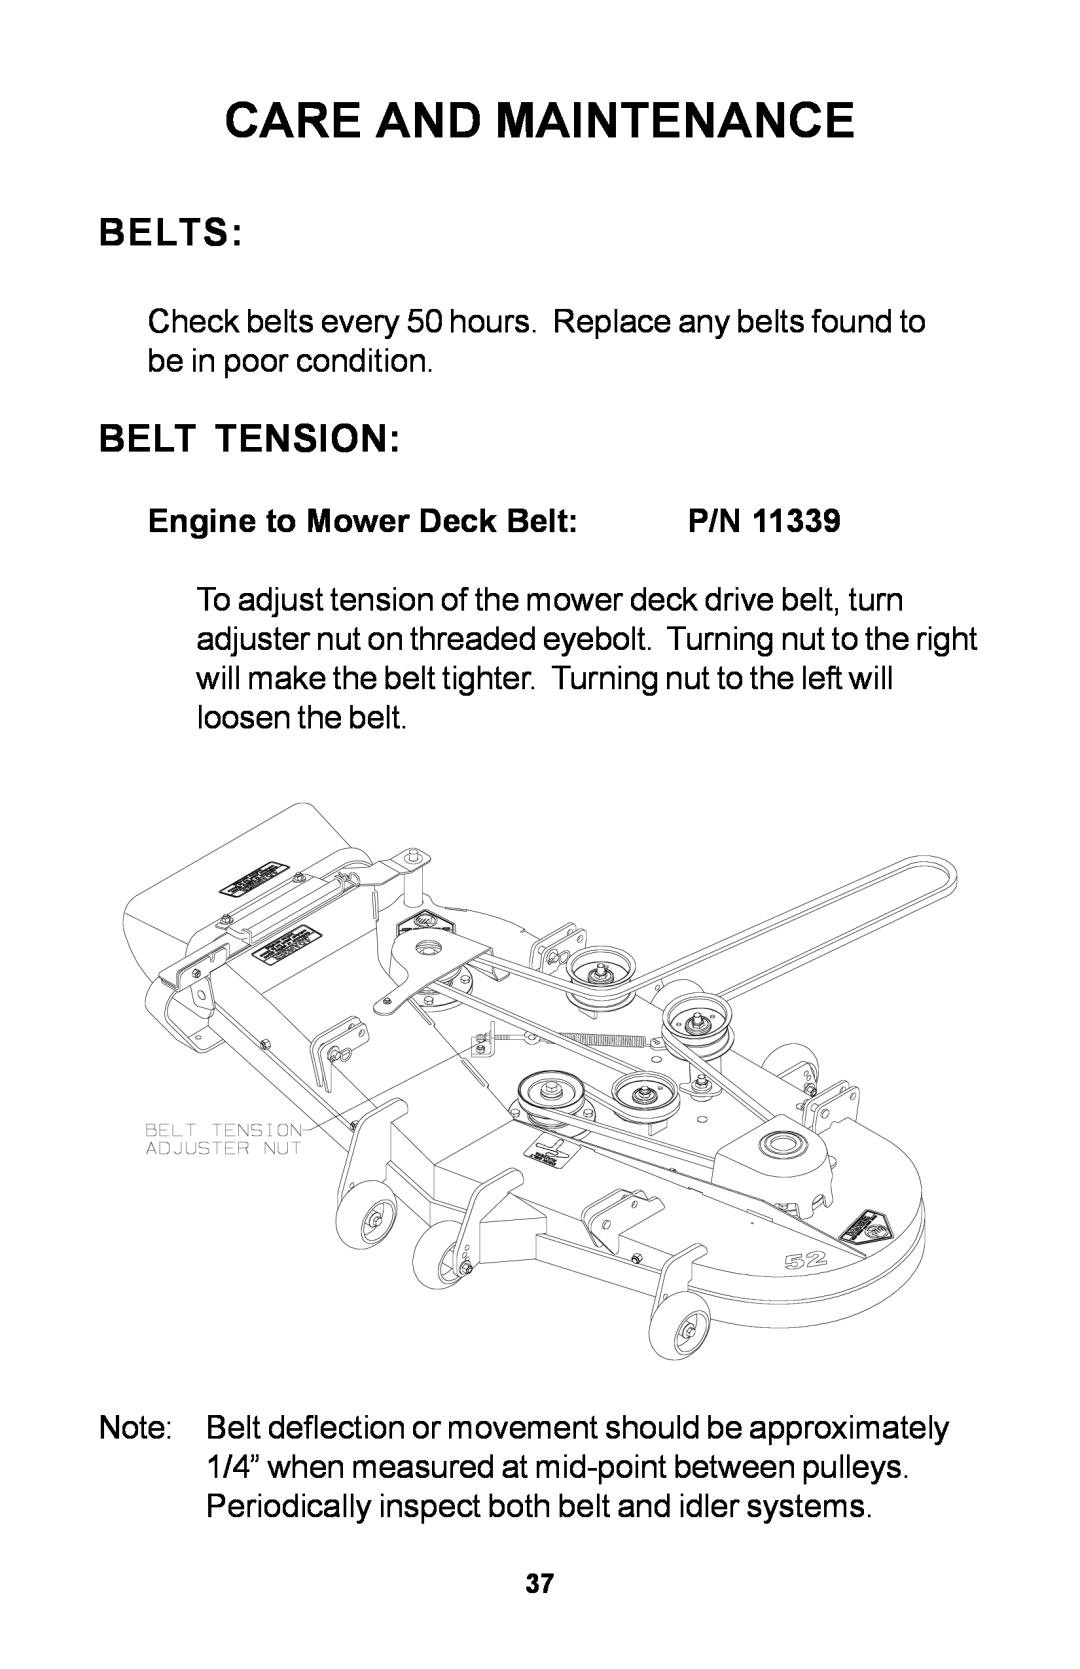 Dixon ZTR manual Belts, Belt Tension, Care And Maintenance, Engine to Mower Deck Belt 